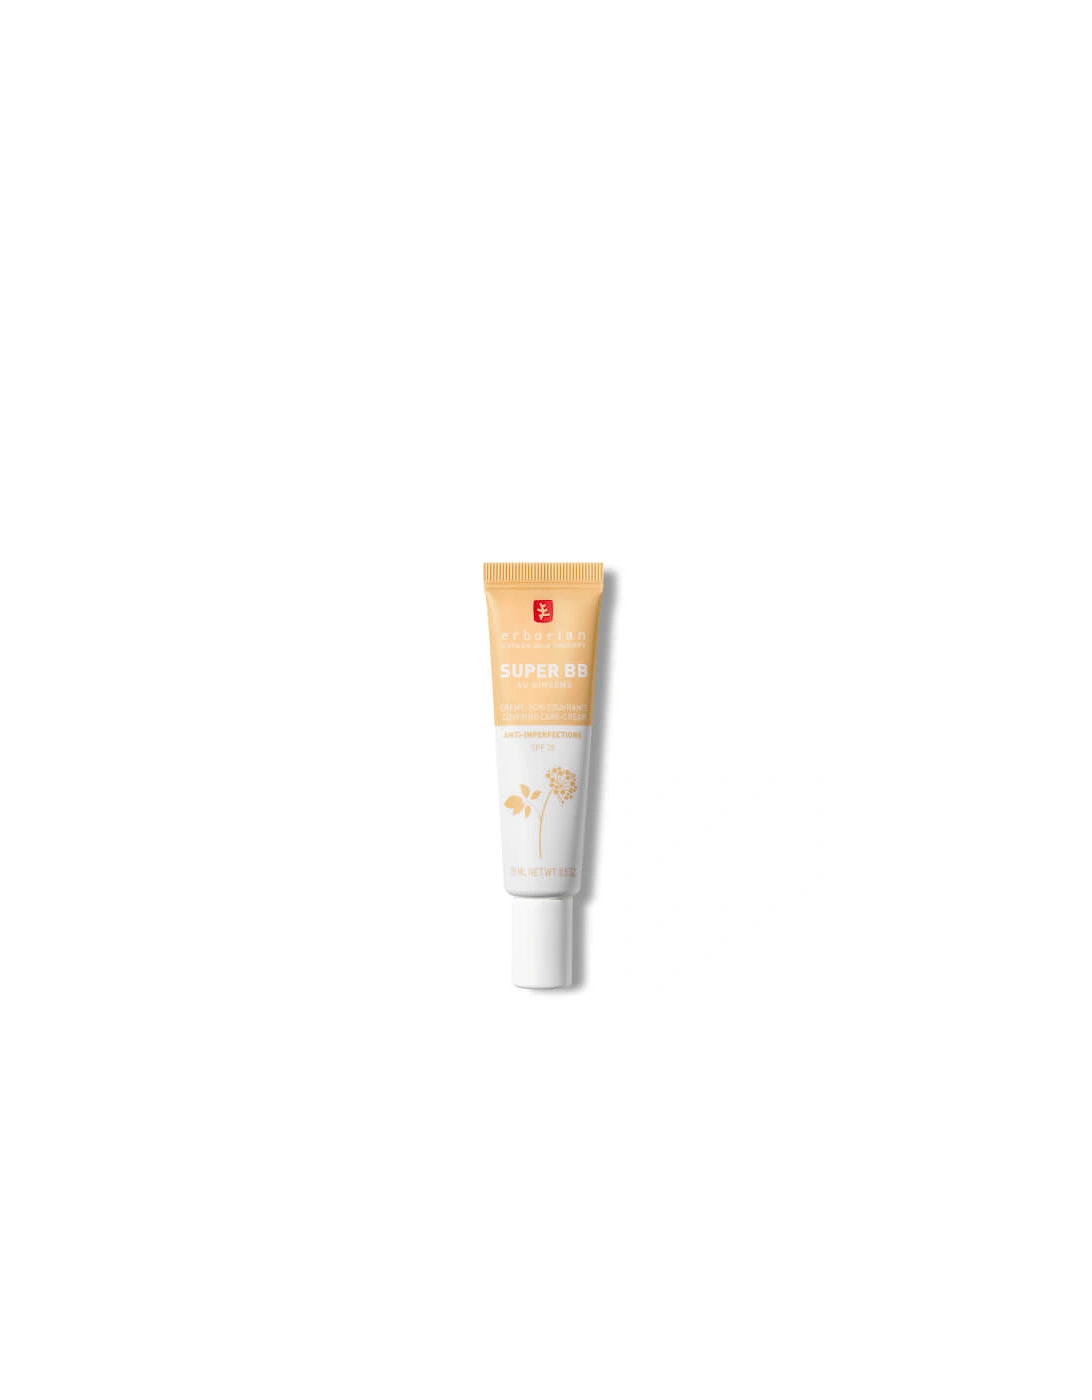 Super BB Cream Nude - Full Coverage Anti-Blemish Tinted Moisturiser SPF20 Travel Size 15ml, 2 of 1